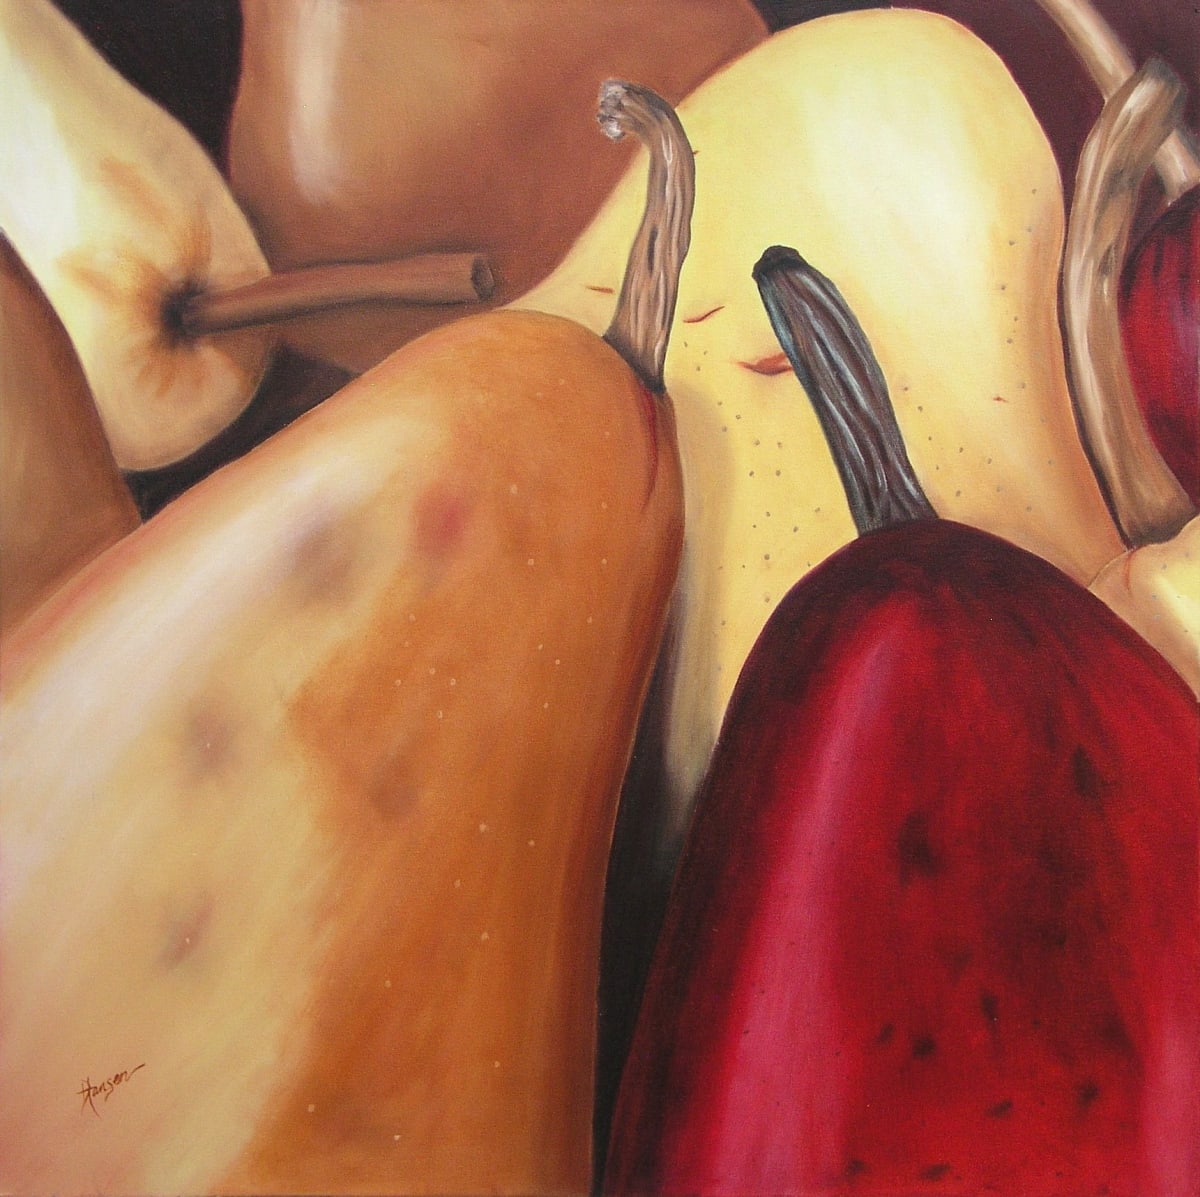 Pears by Debbie Hansen  Image: "Pears," by Debbie Hansen, 2005